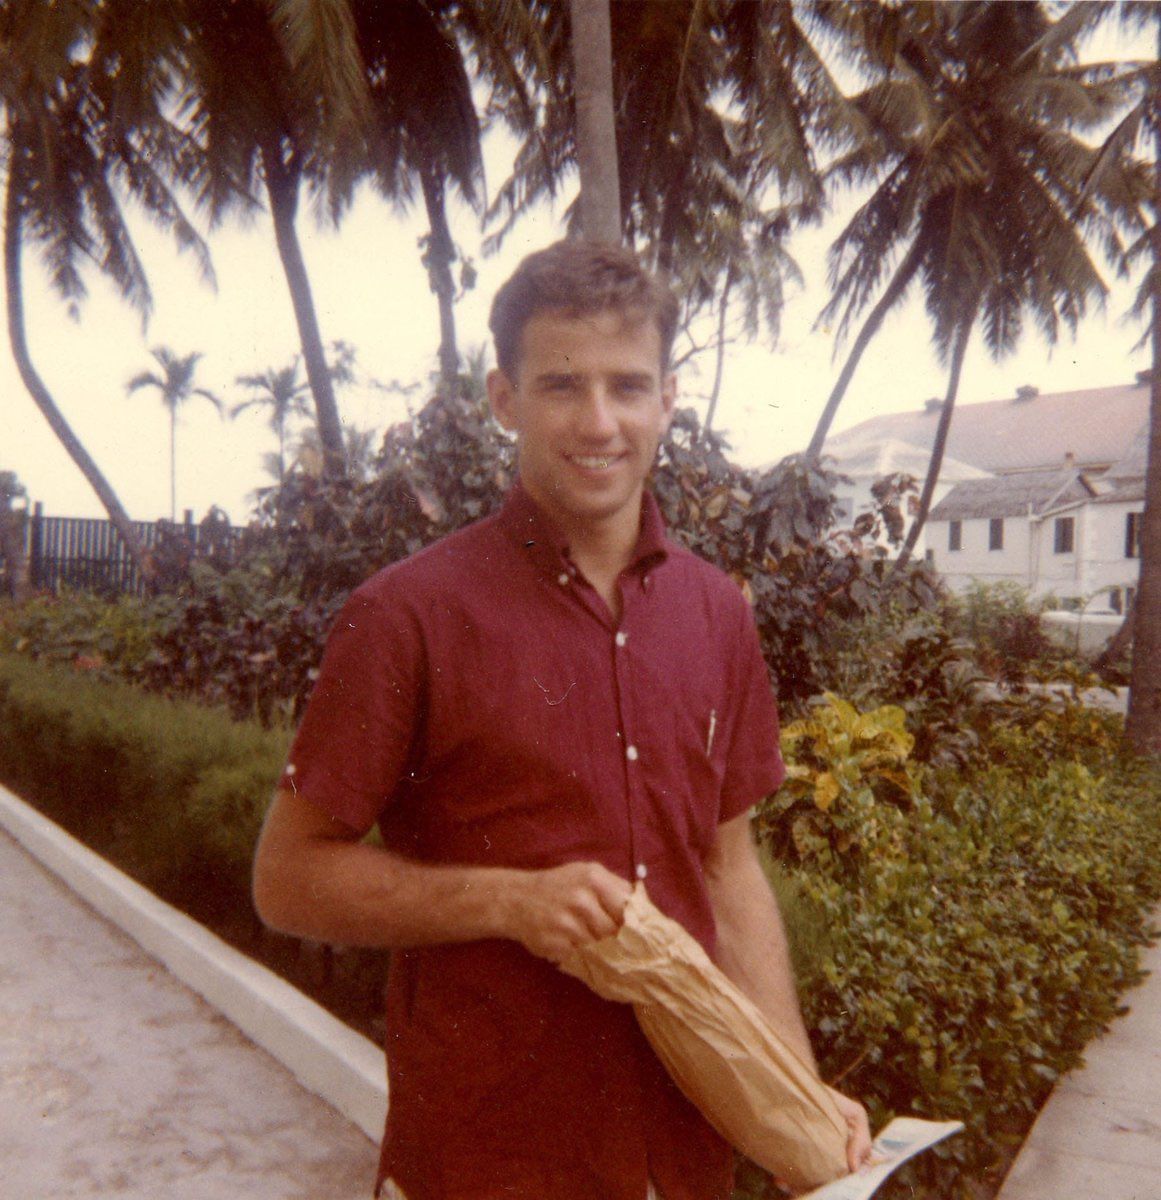 What Did Joe Biden Look Like as a Young Man - Photos of Joe Biden in His 20s